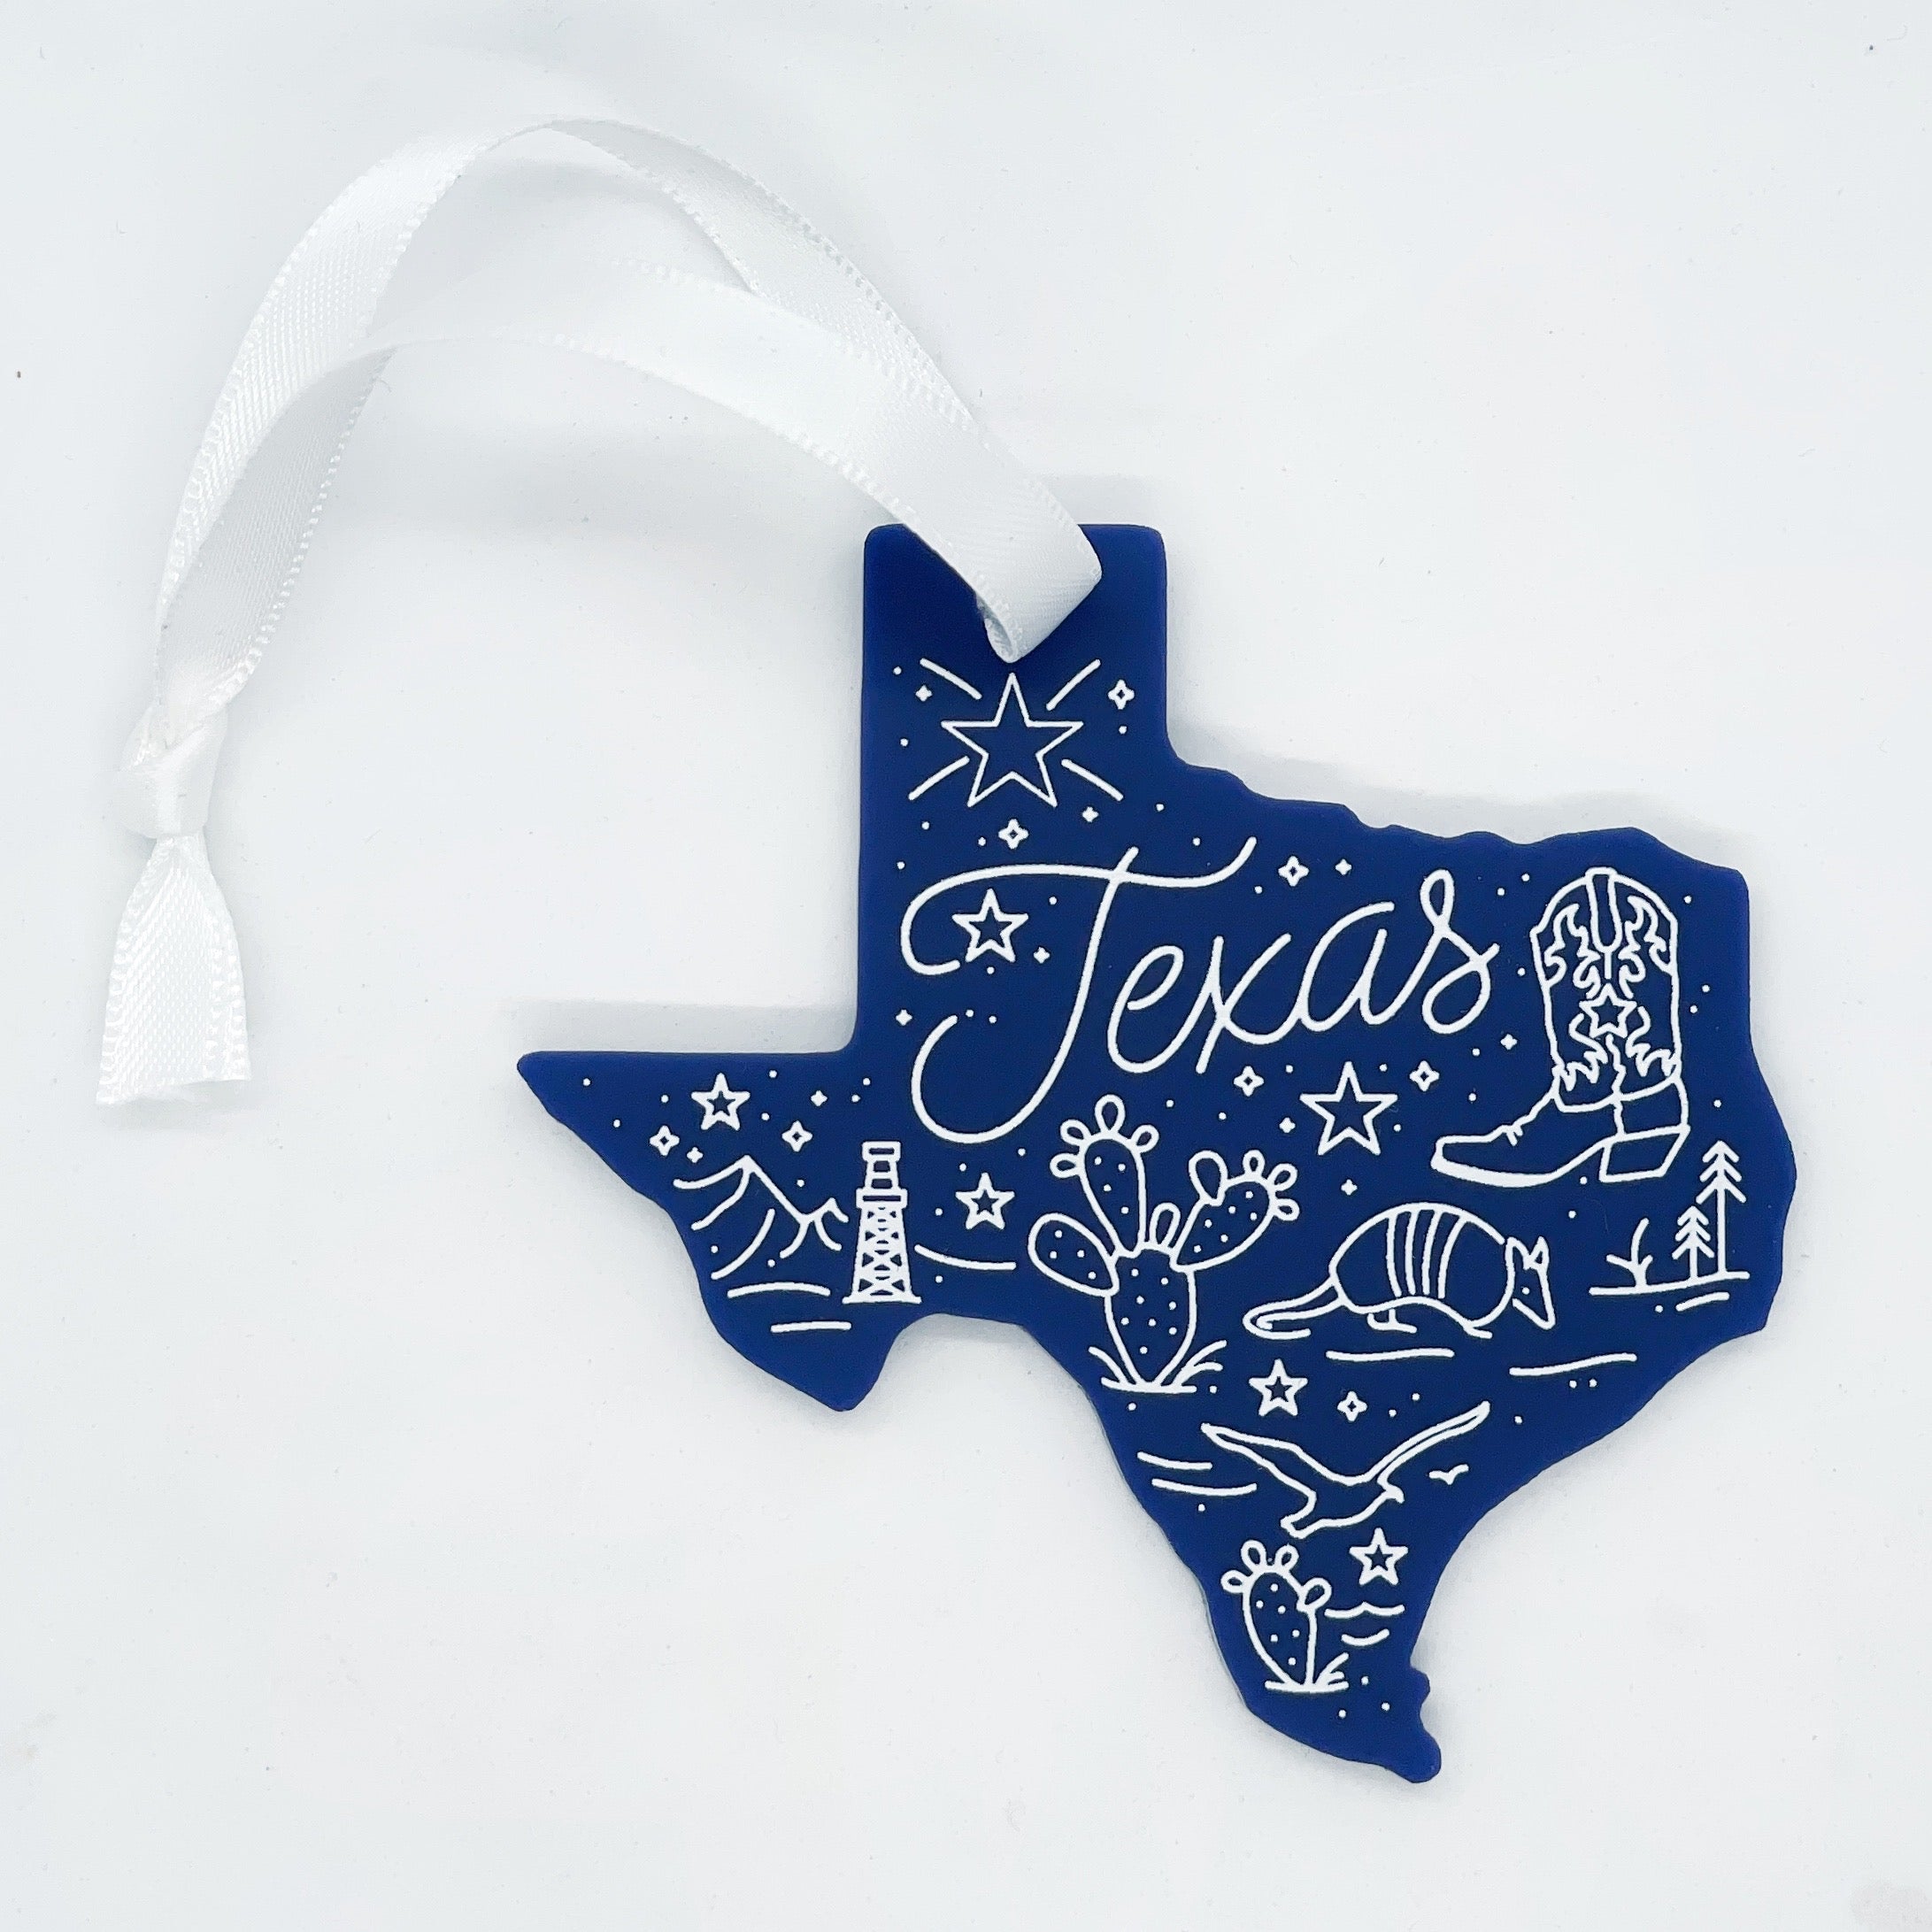 Around Texas Acrylic Ornament